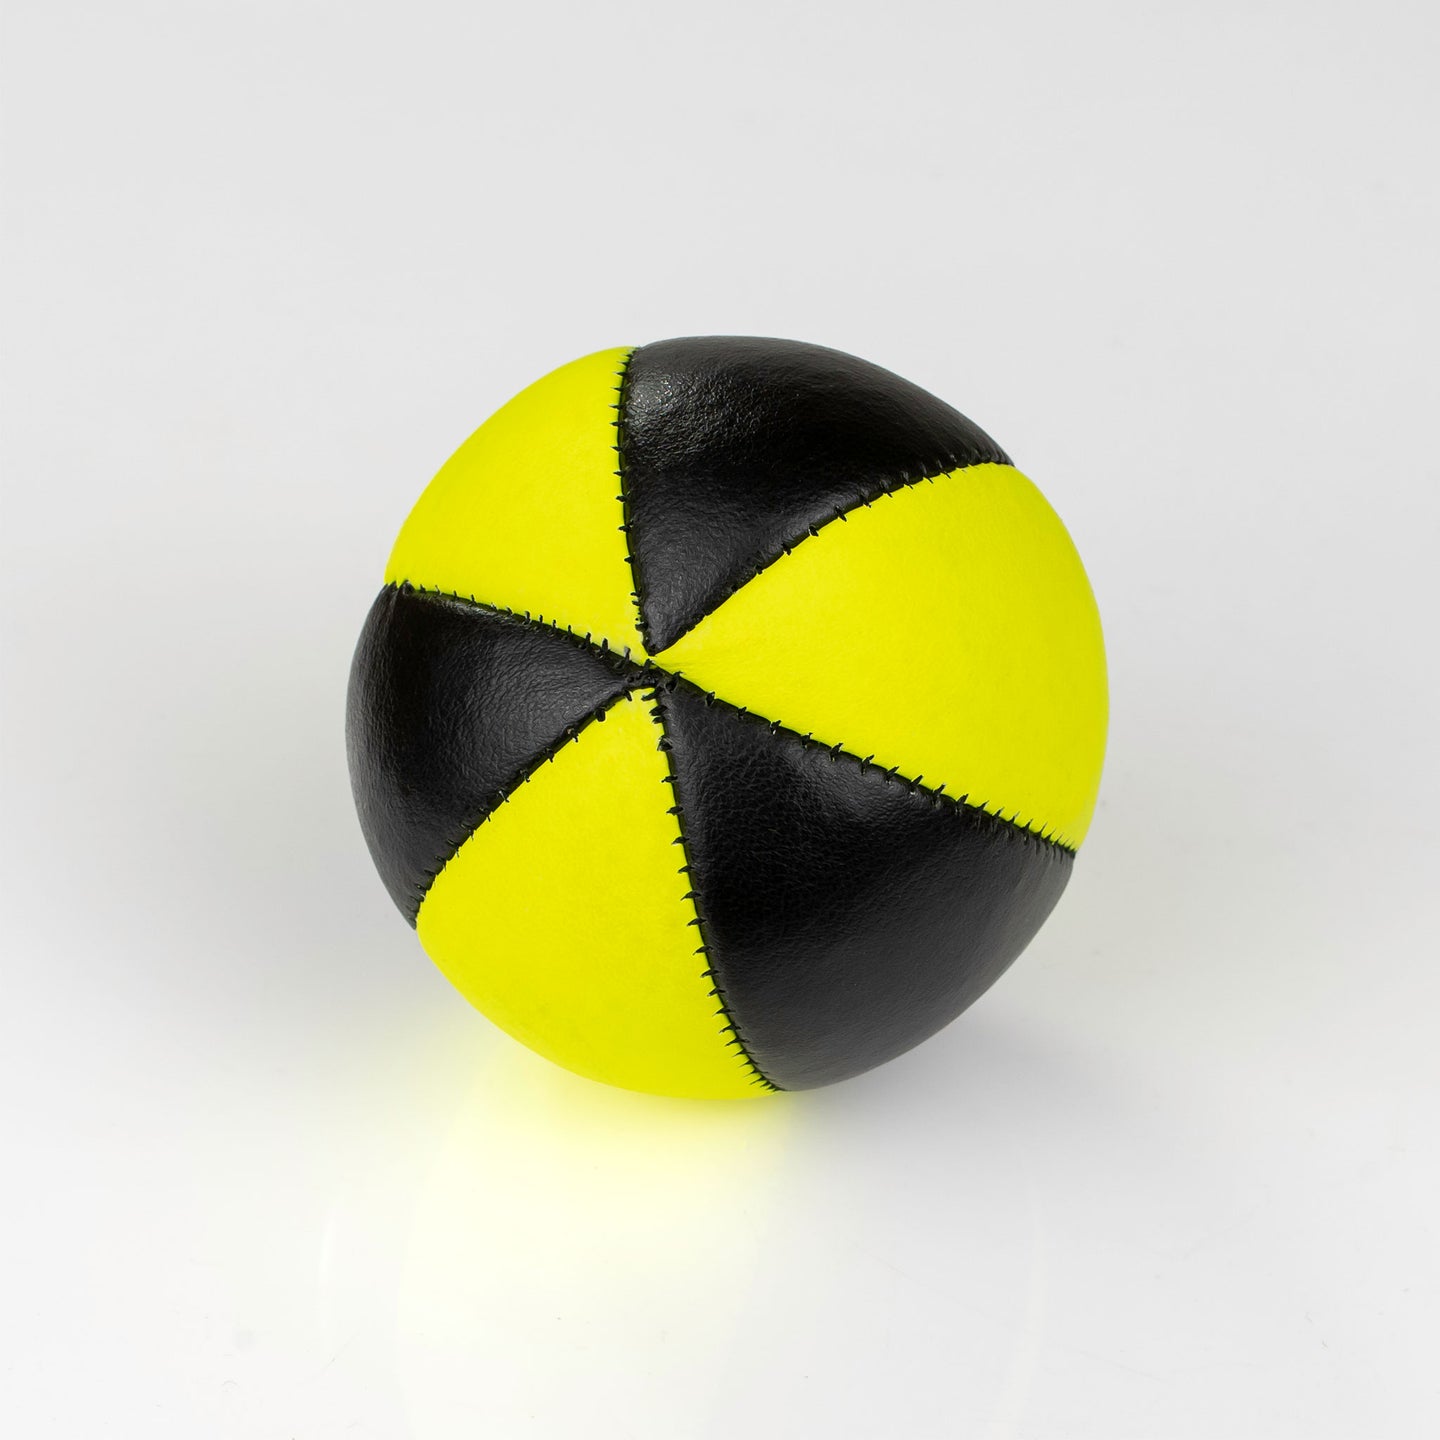 Juggle Dream Pro Star 6-Panel Juggling Ball - UV Yellow / Black